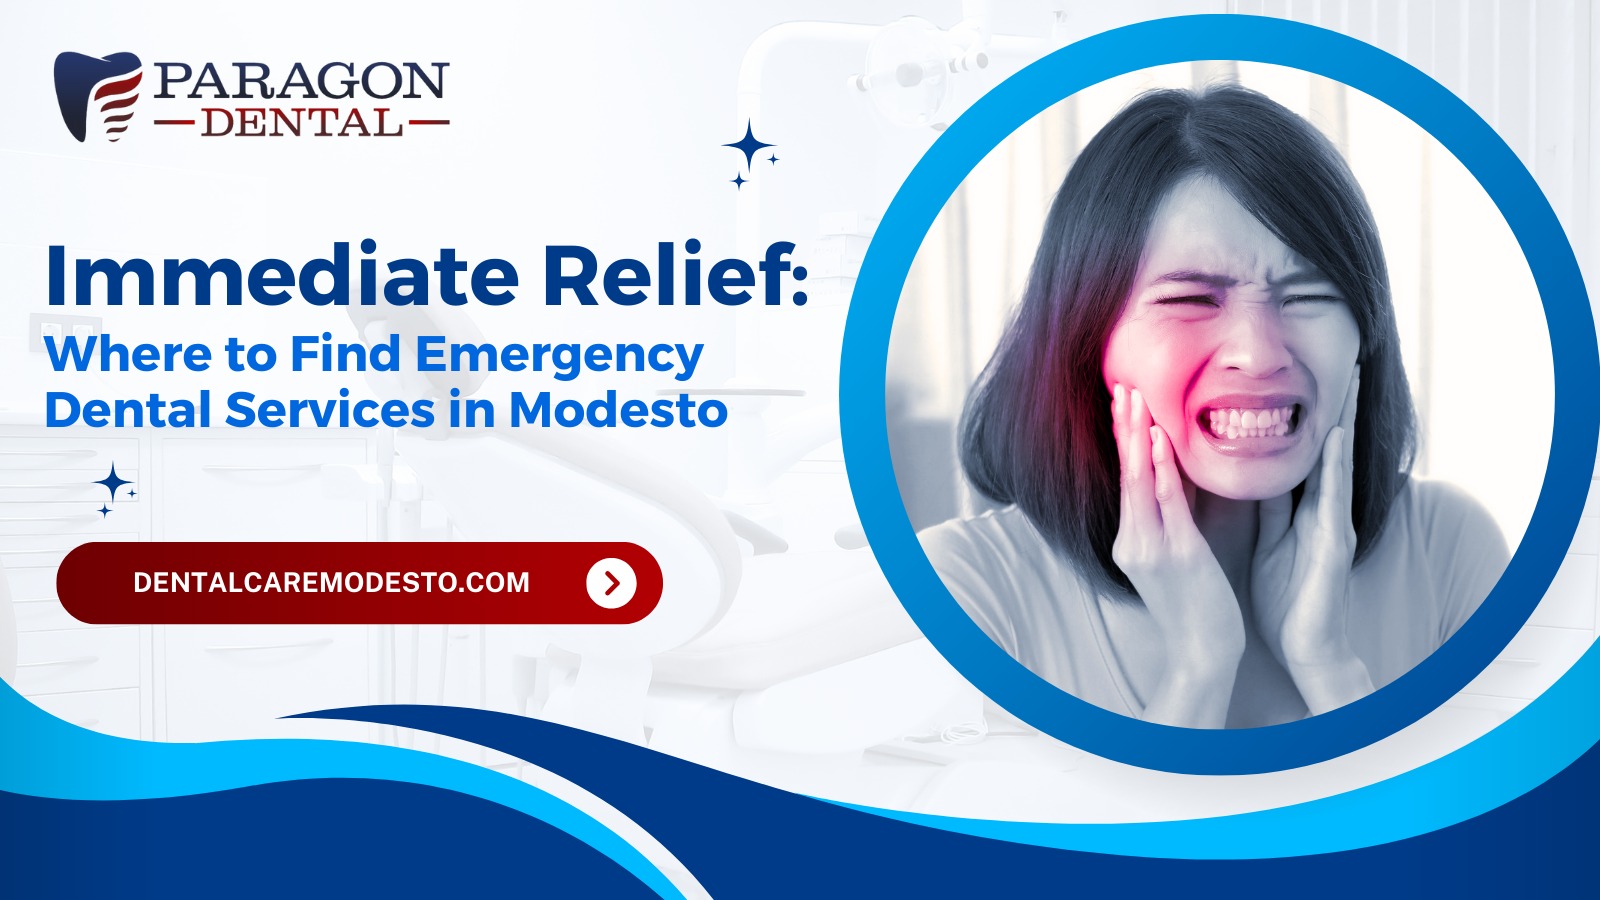 Emergency Dental Services in Modesto